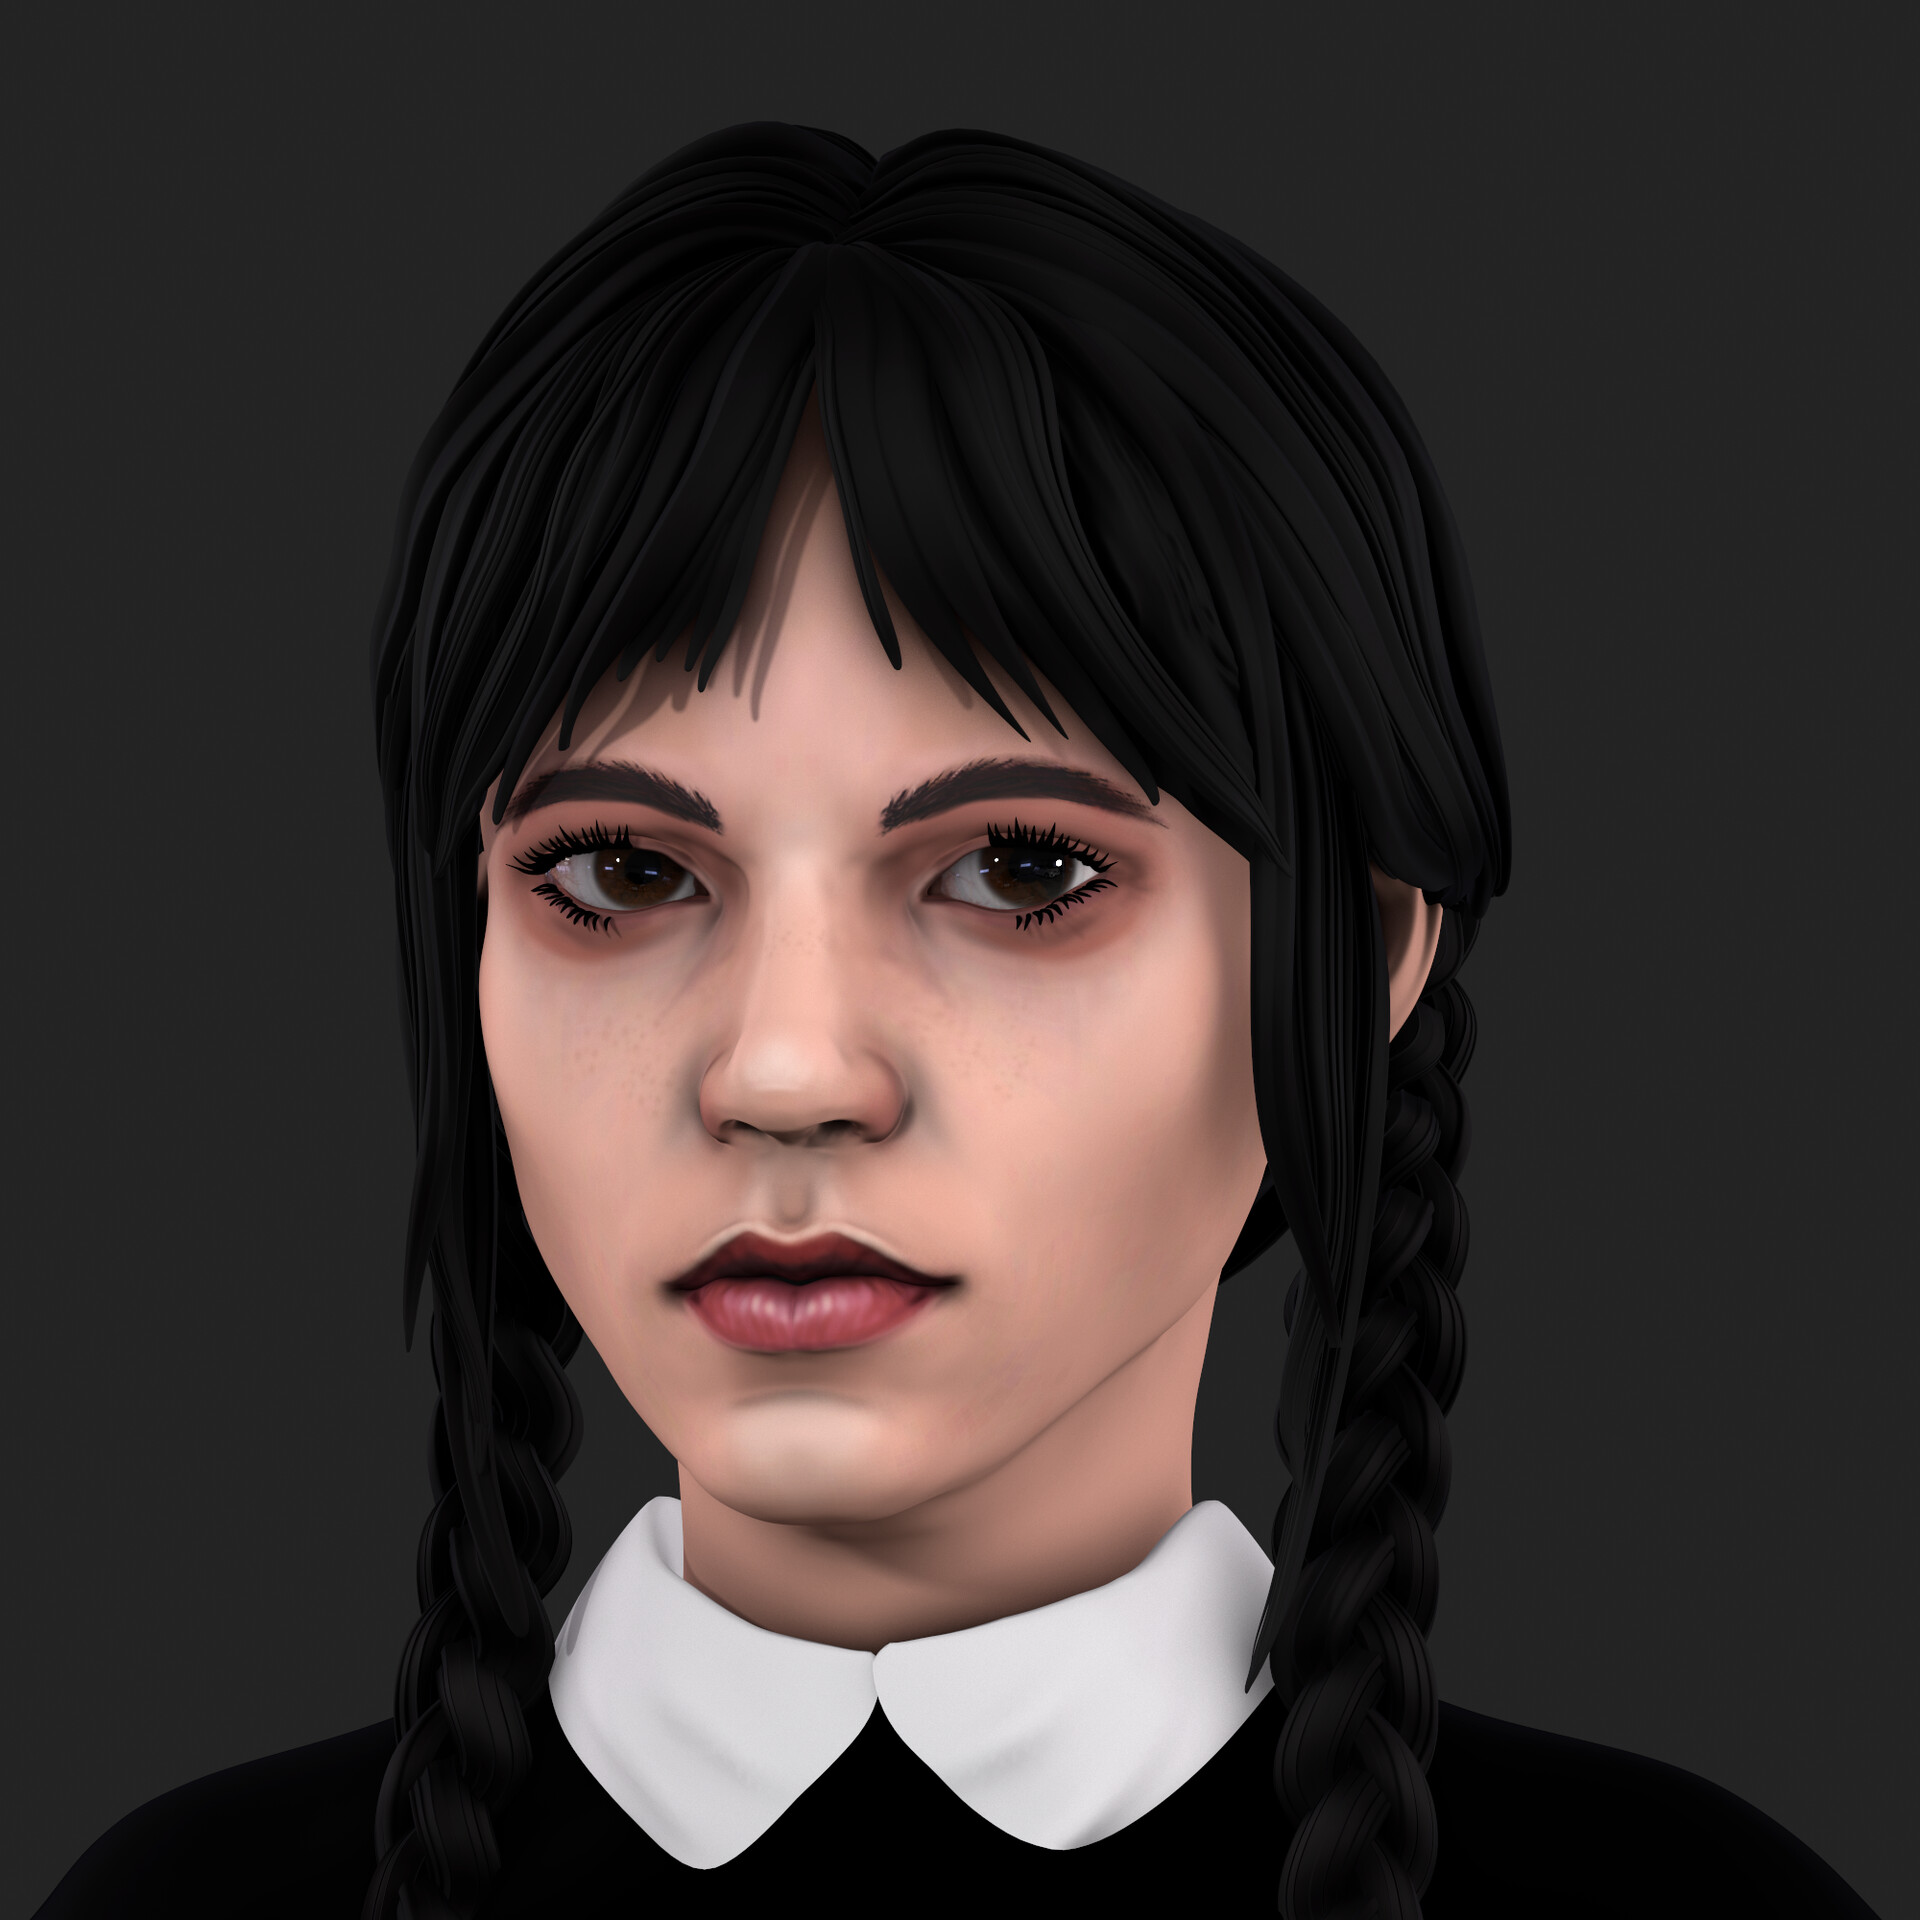 ArtStation - Wednesday Addams portrait